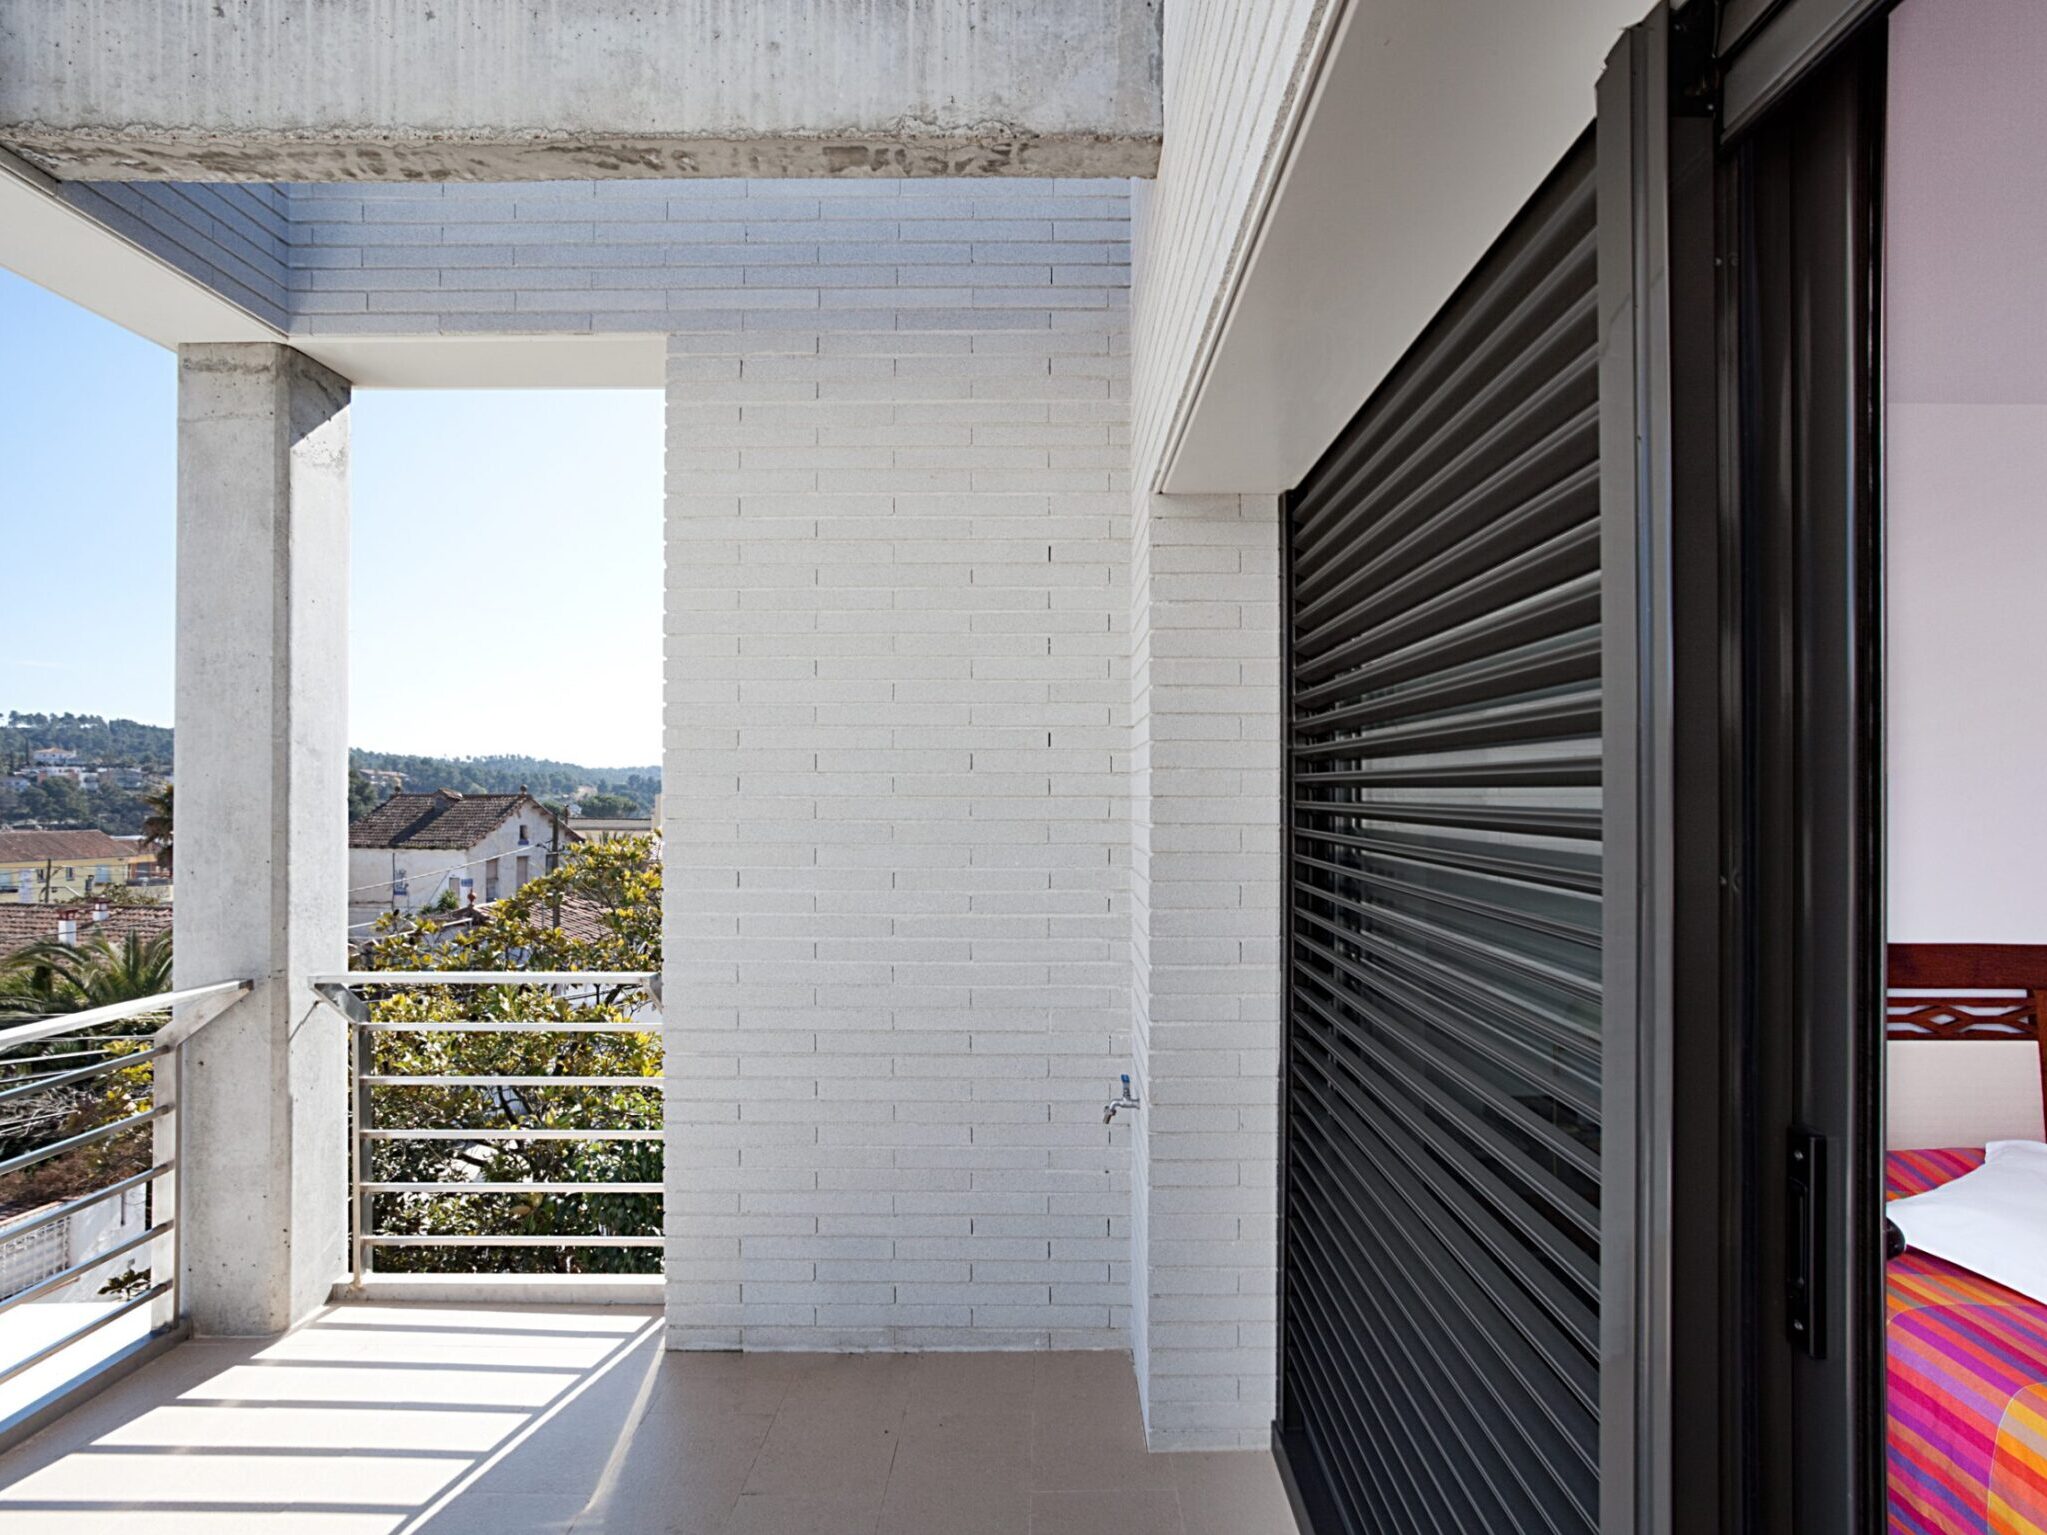 Habitatge unifamiliar - balcó | DuesARQuitectes